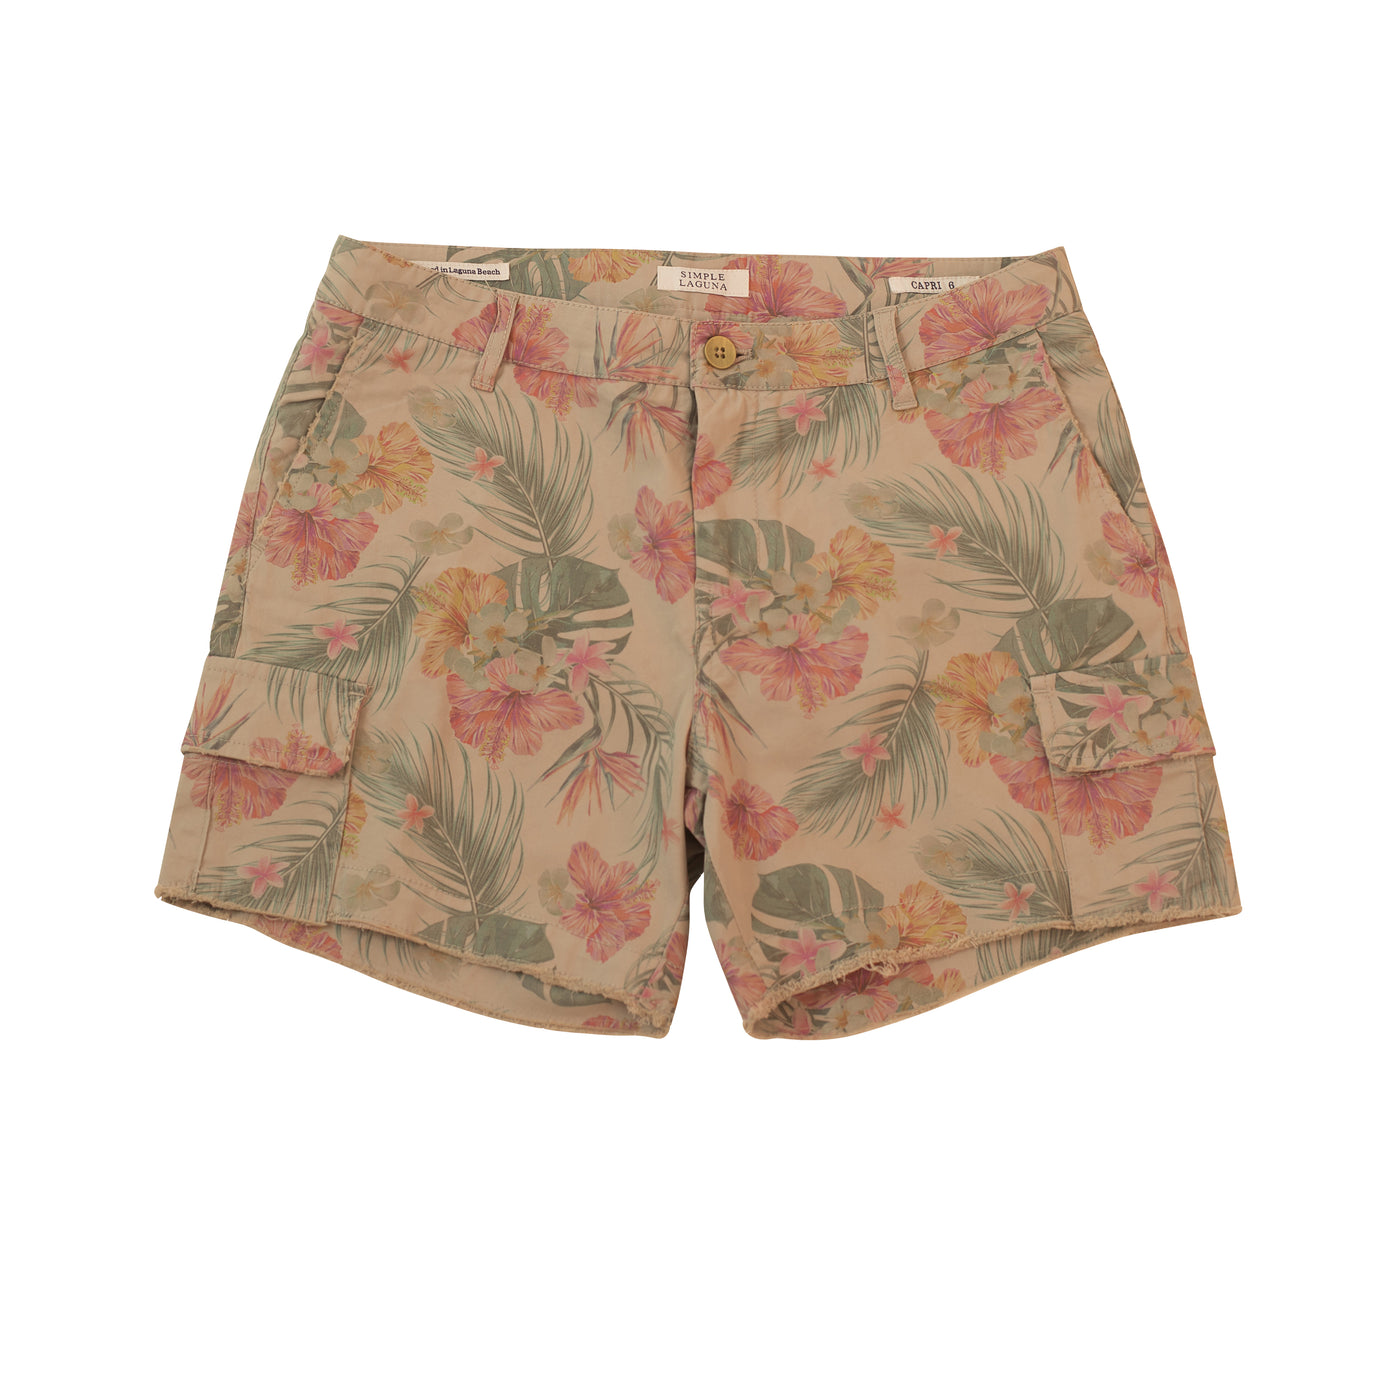 Laguna Beach Shorts